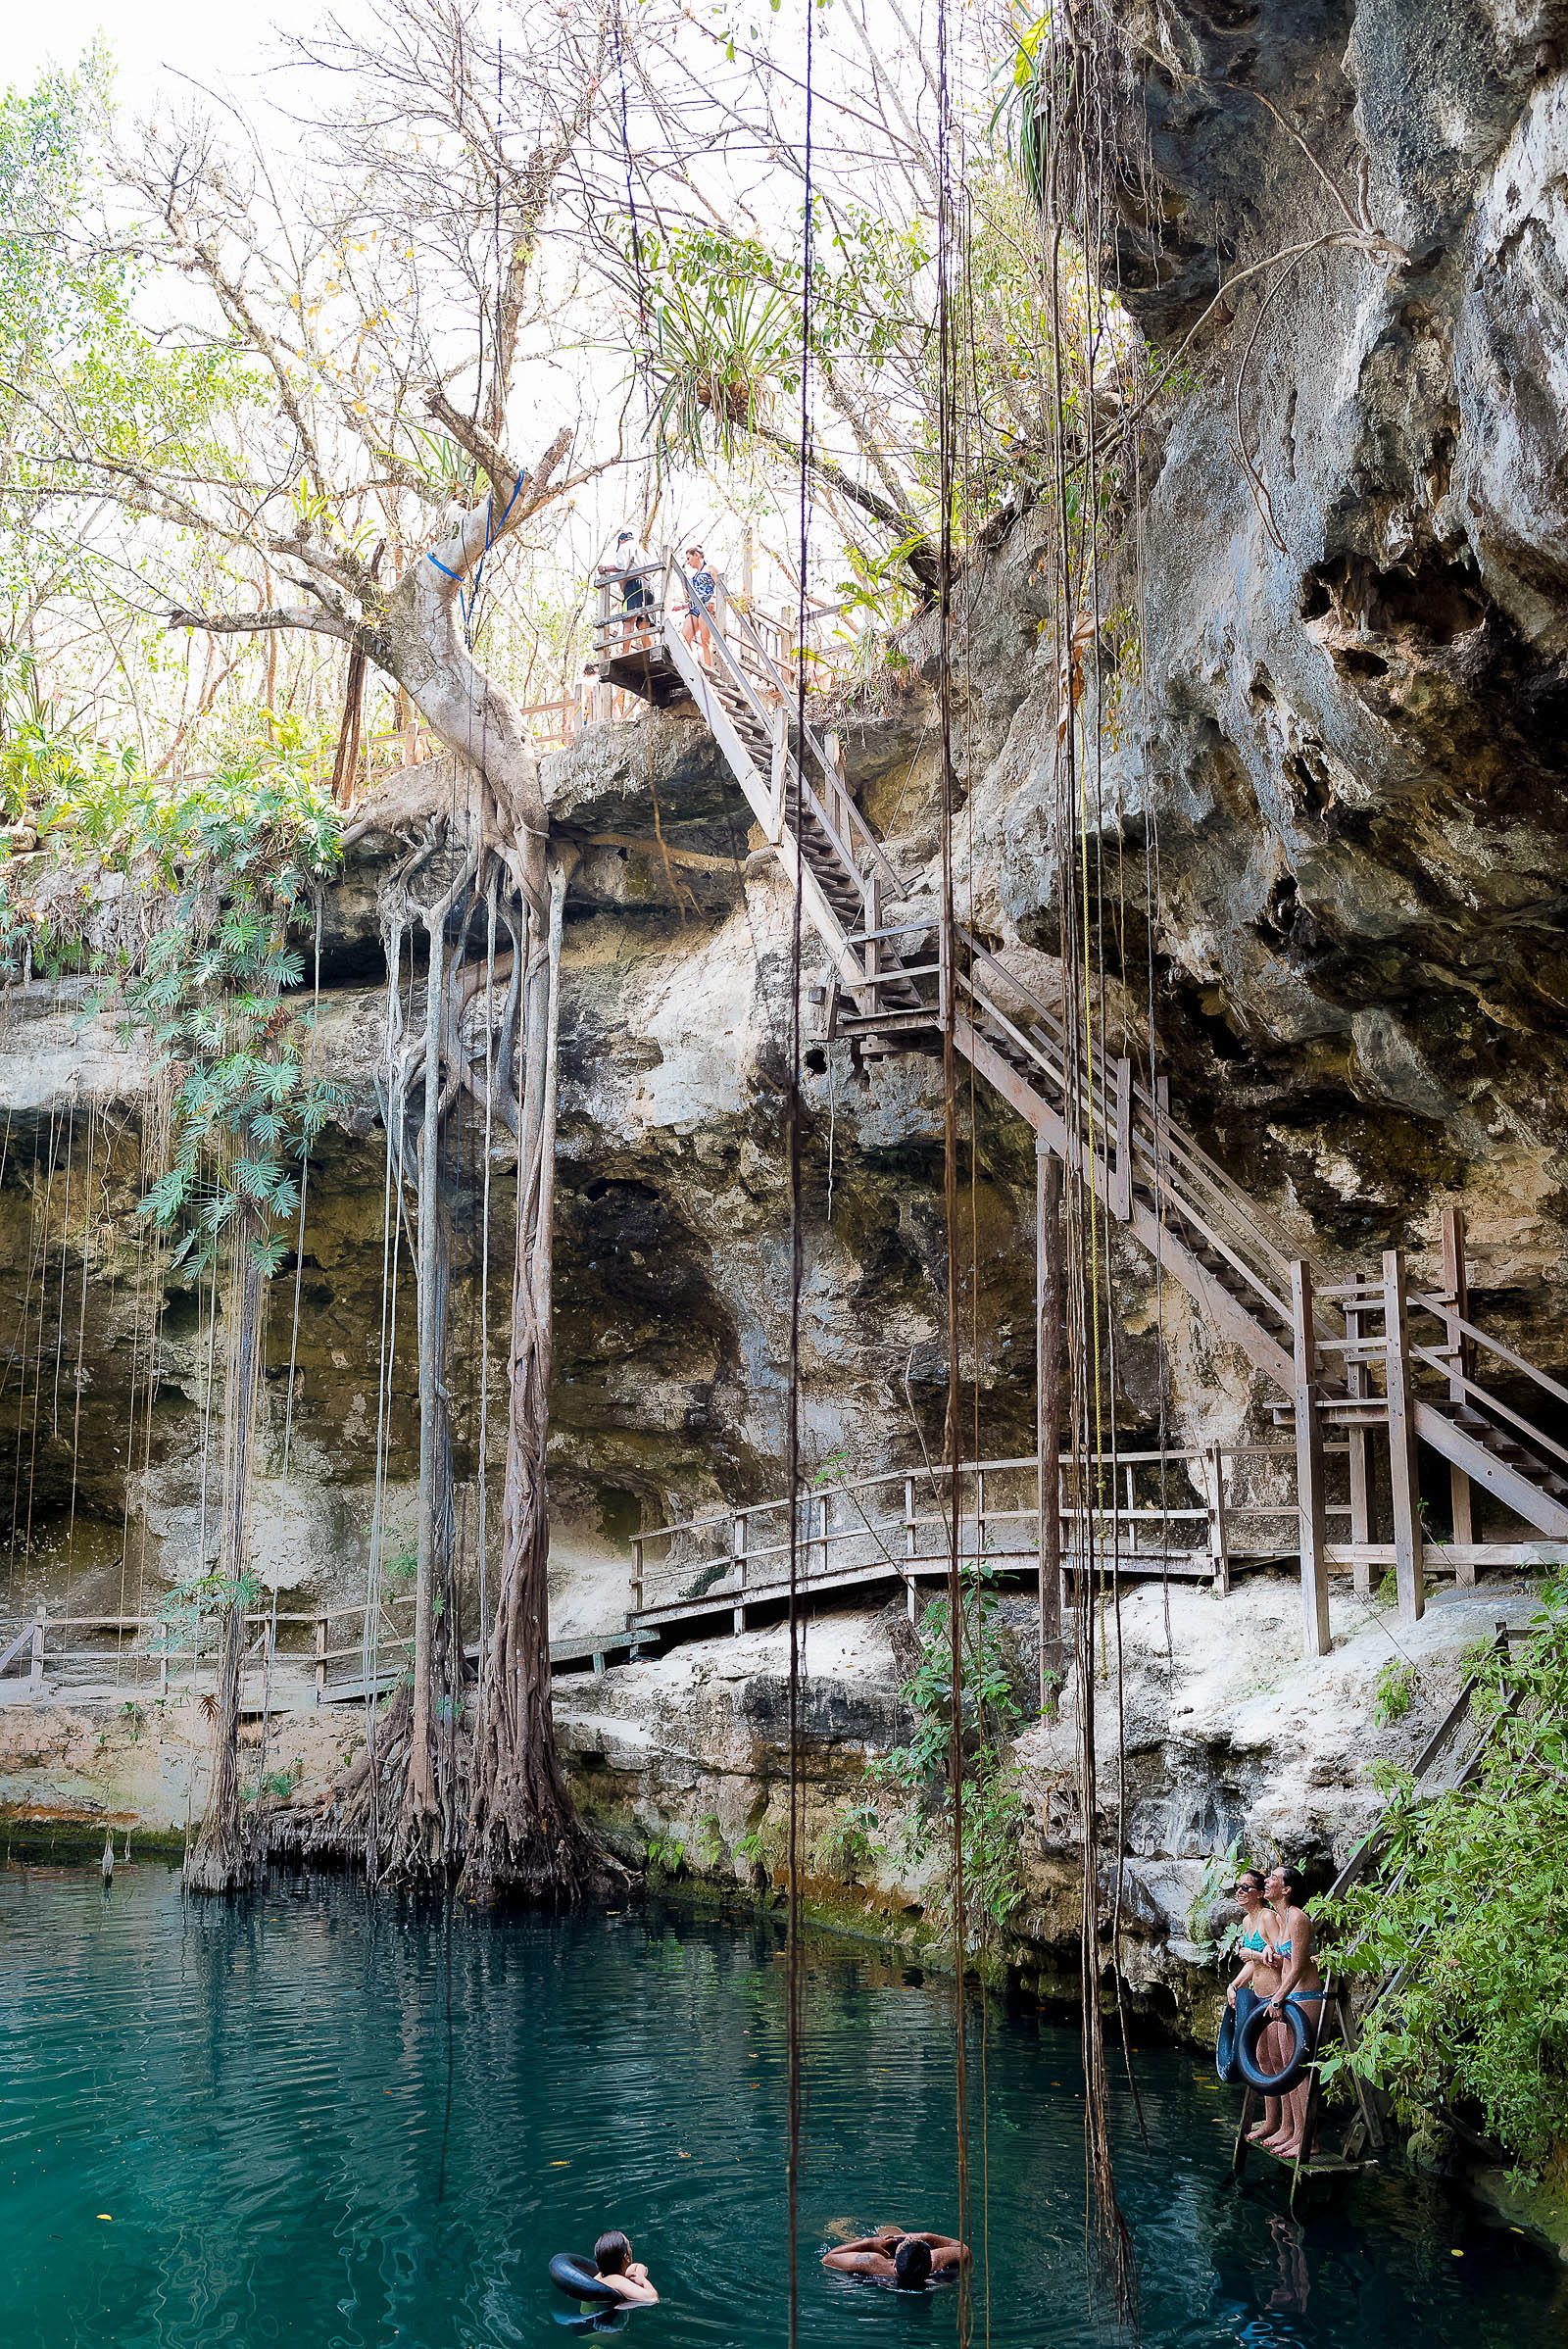 Ek Balam Mayan Archaeological Site and Mayan Cenote, Yucatán Mexico